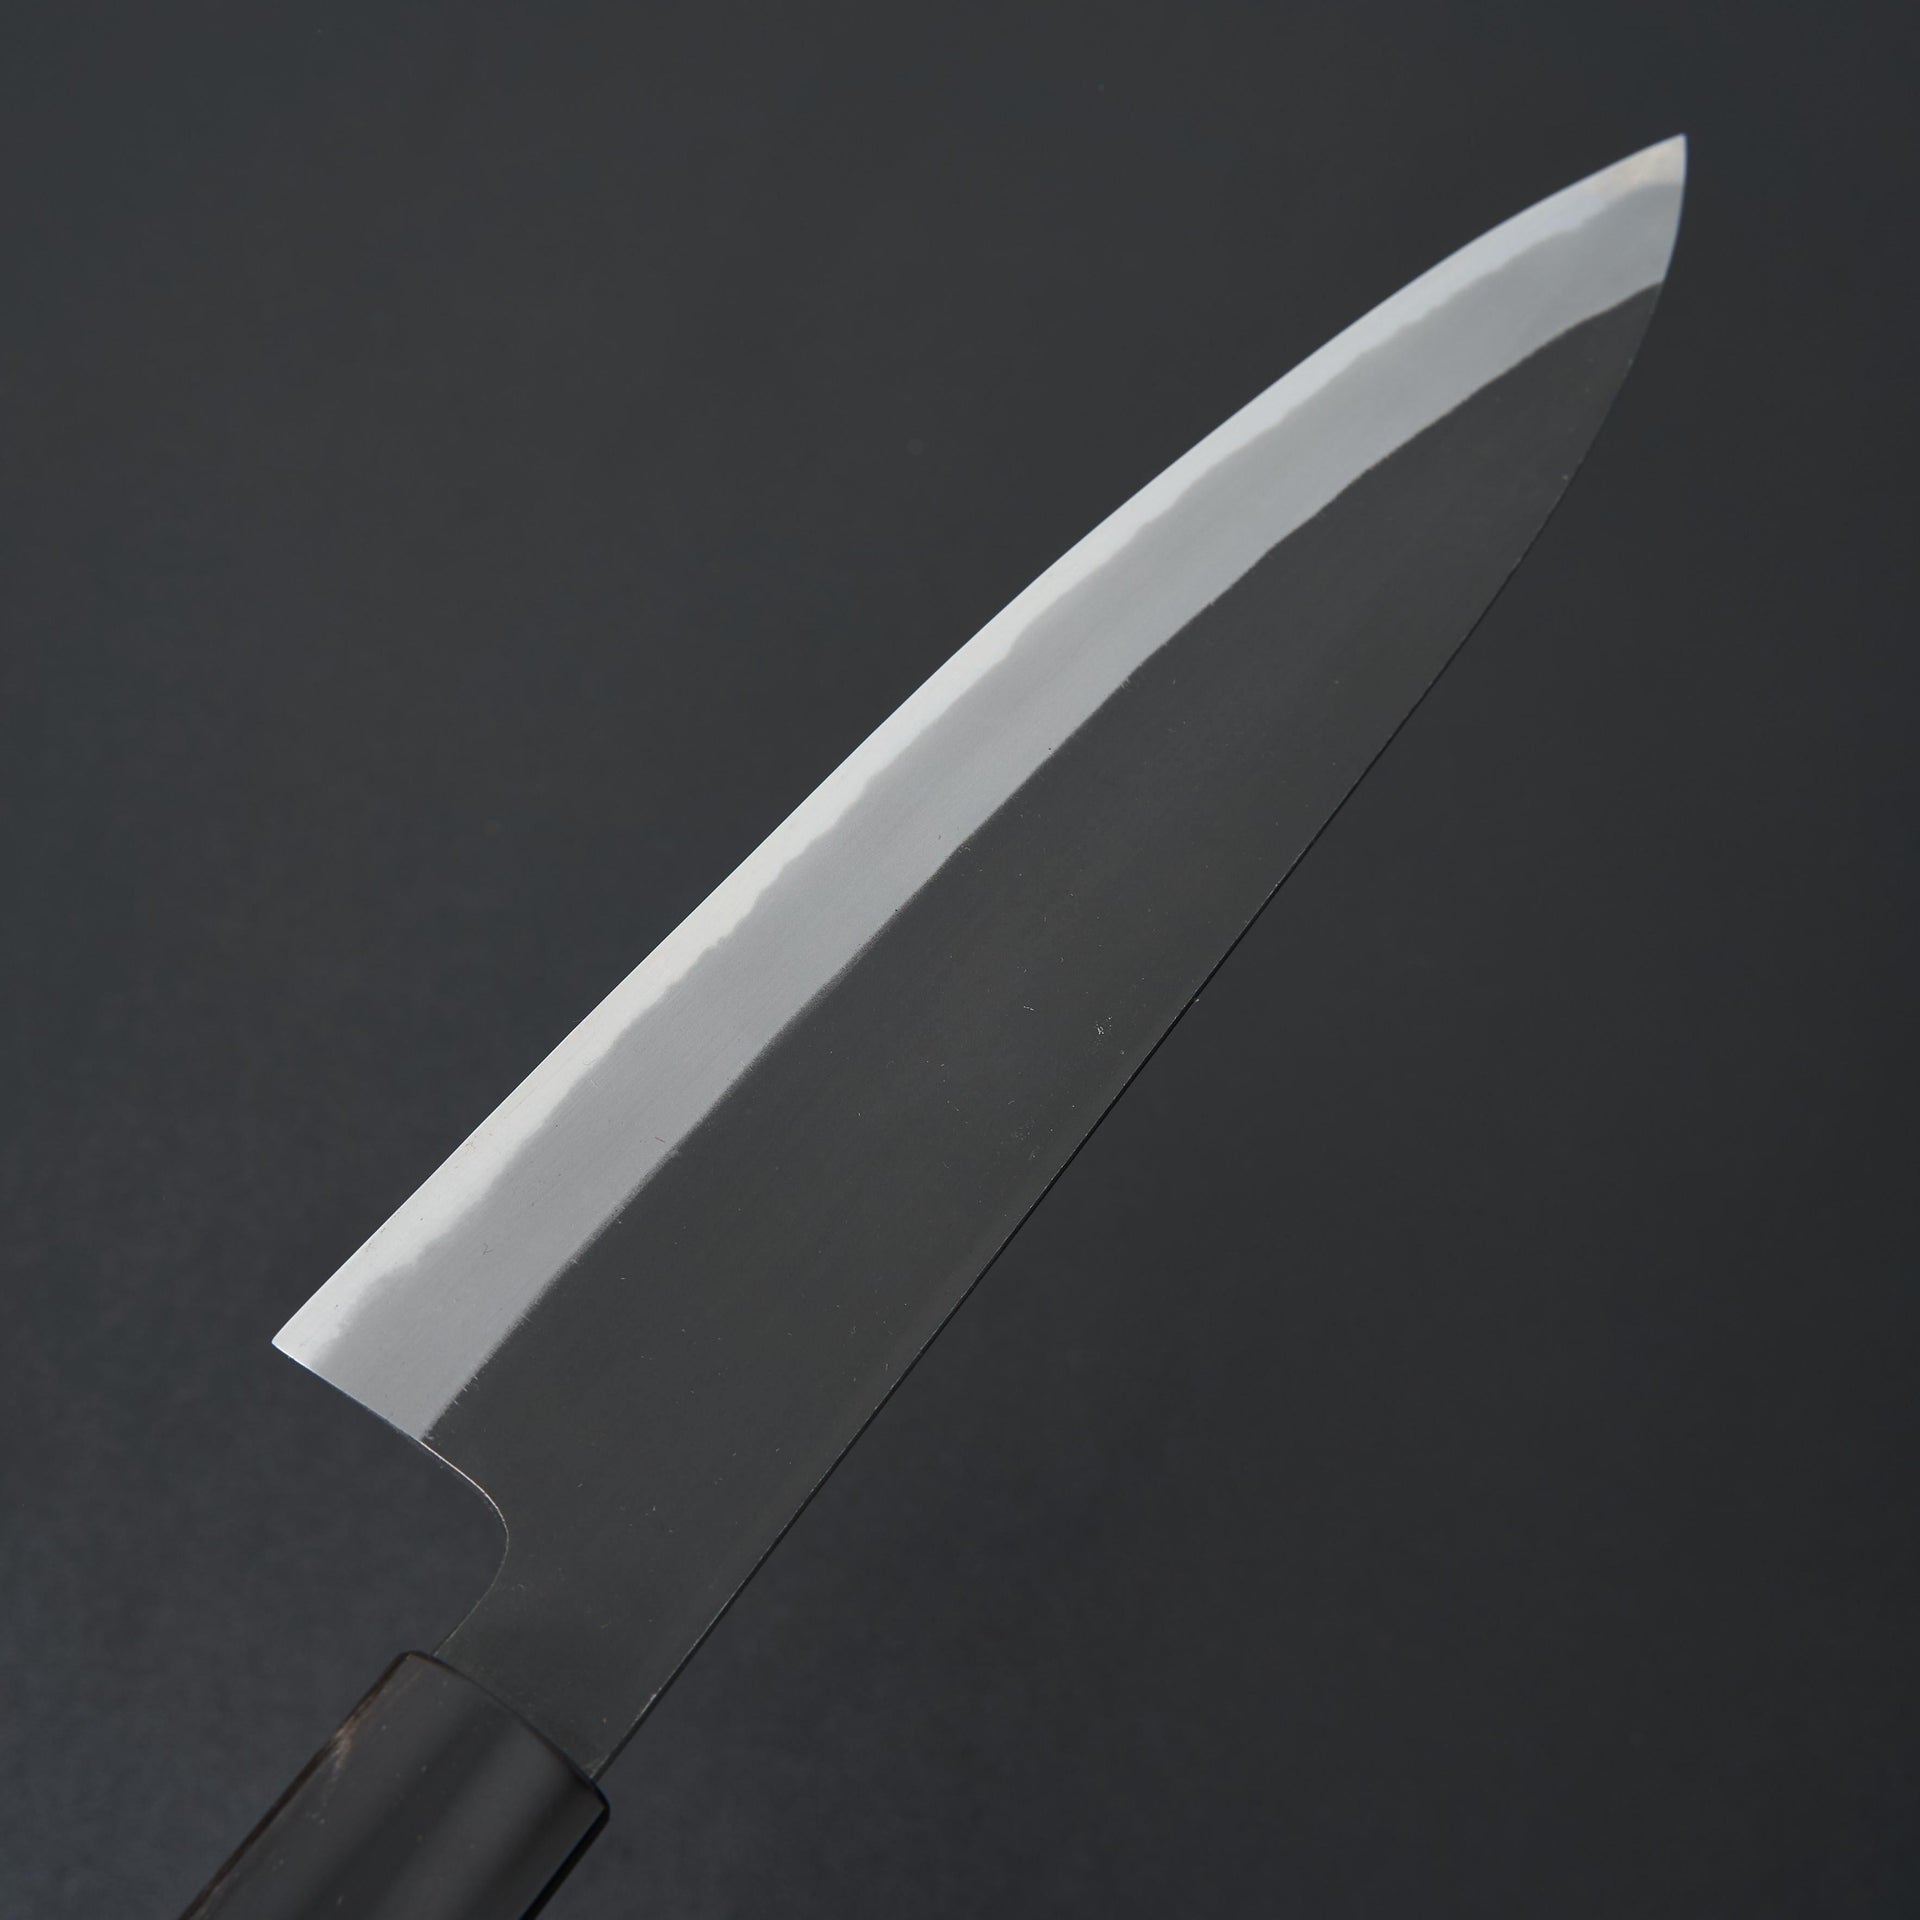 Hinoura Ajikataya Shirogami 2 Kurouchi Gyuto 240mm-Knife-Hinoura-Carbon Knife Co